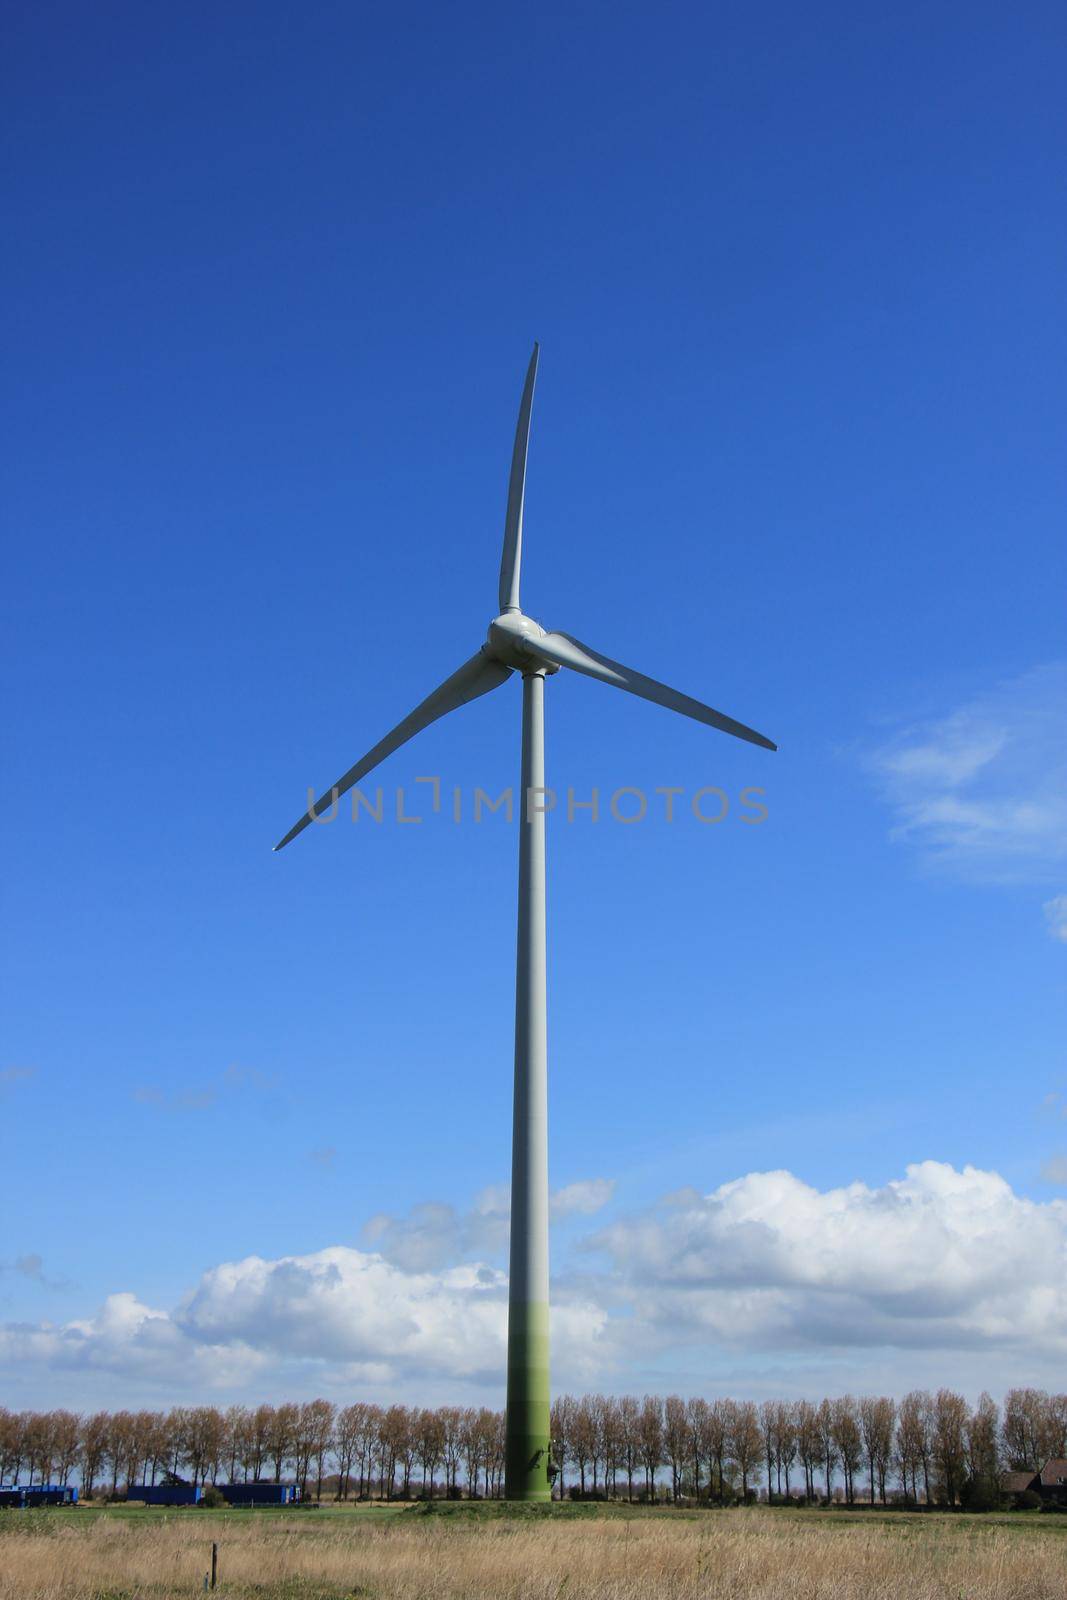 A Wind turbine generating electricity in a blue sky